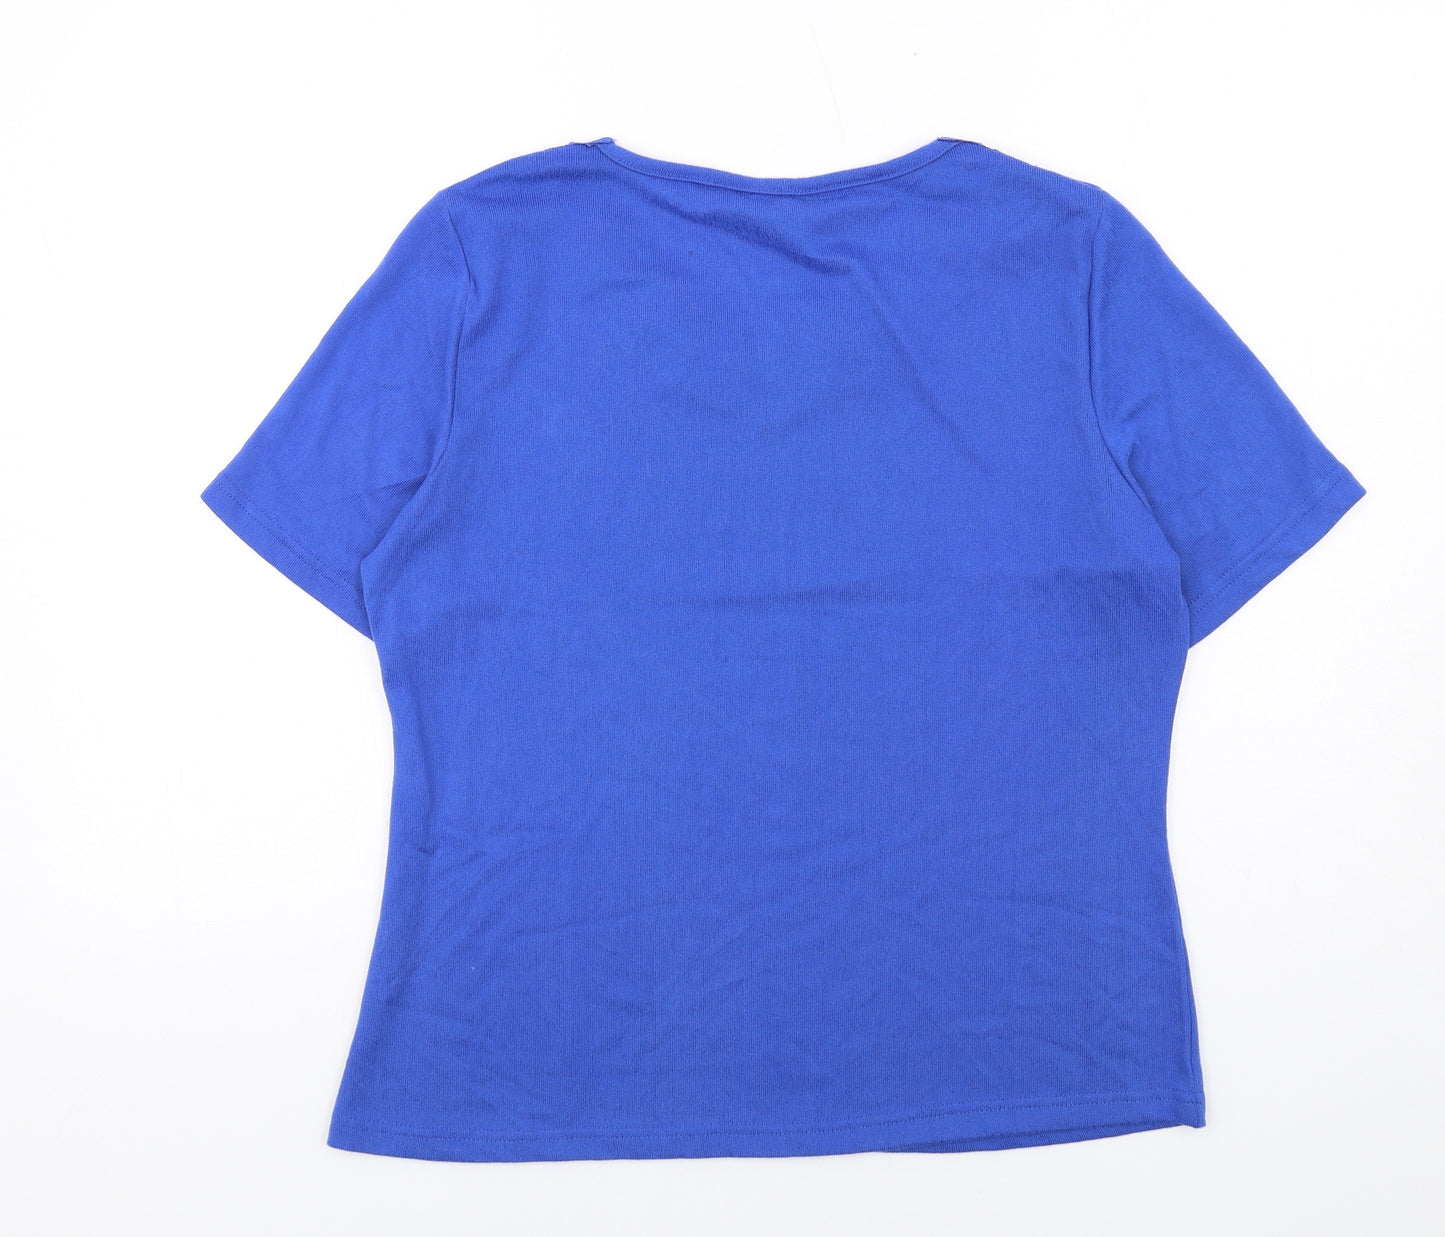 EWM Womens Blue Polyester Basic T-Shirt Size 14 Boat Neck - Neckline Detail